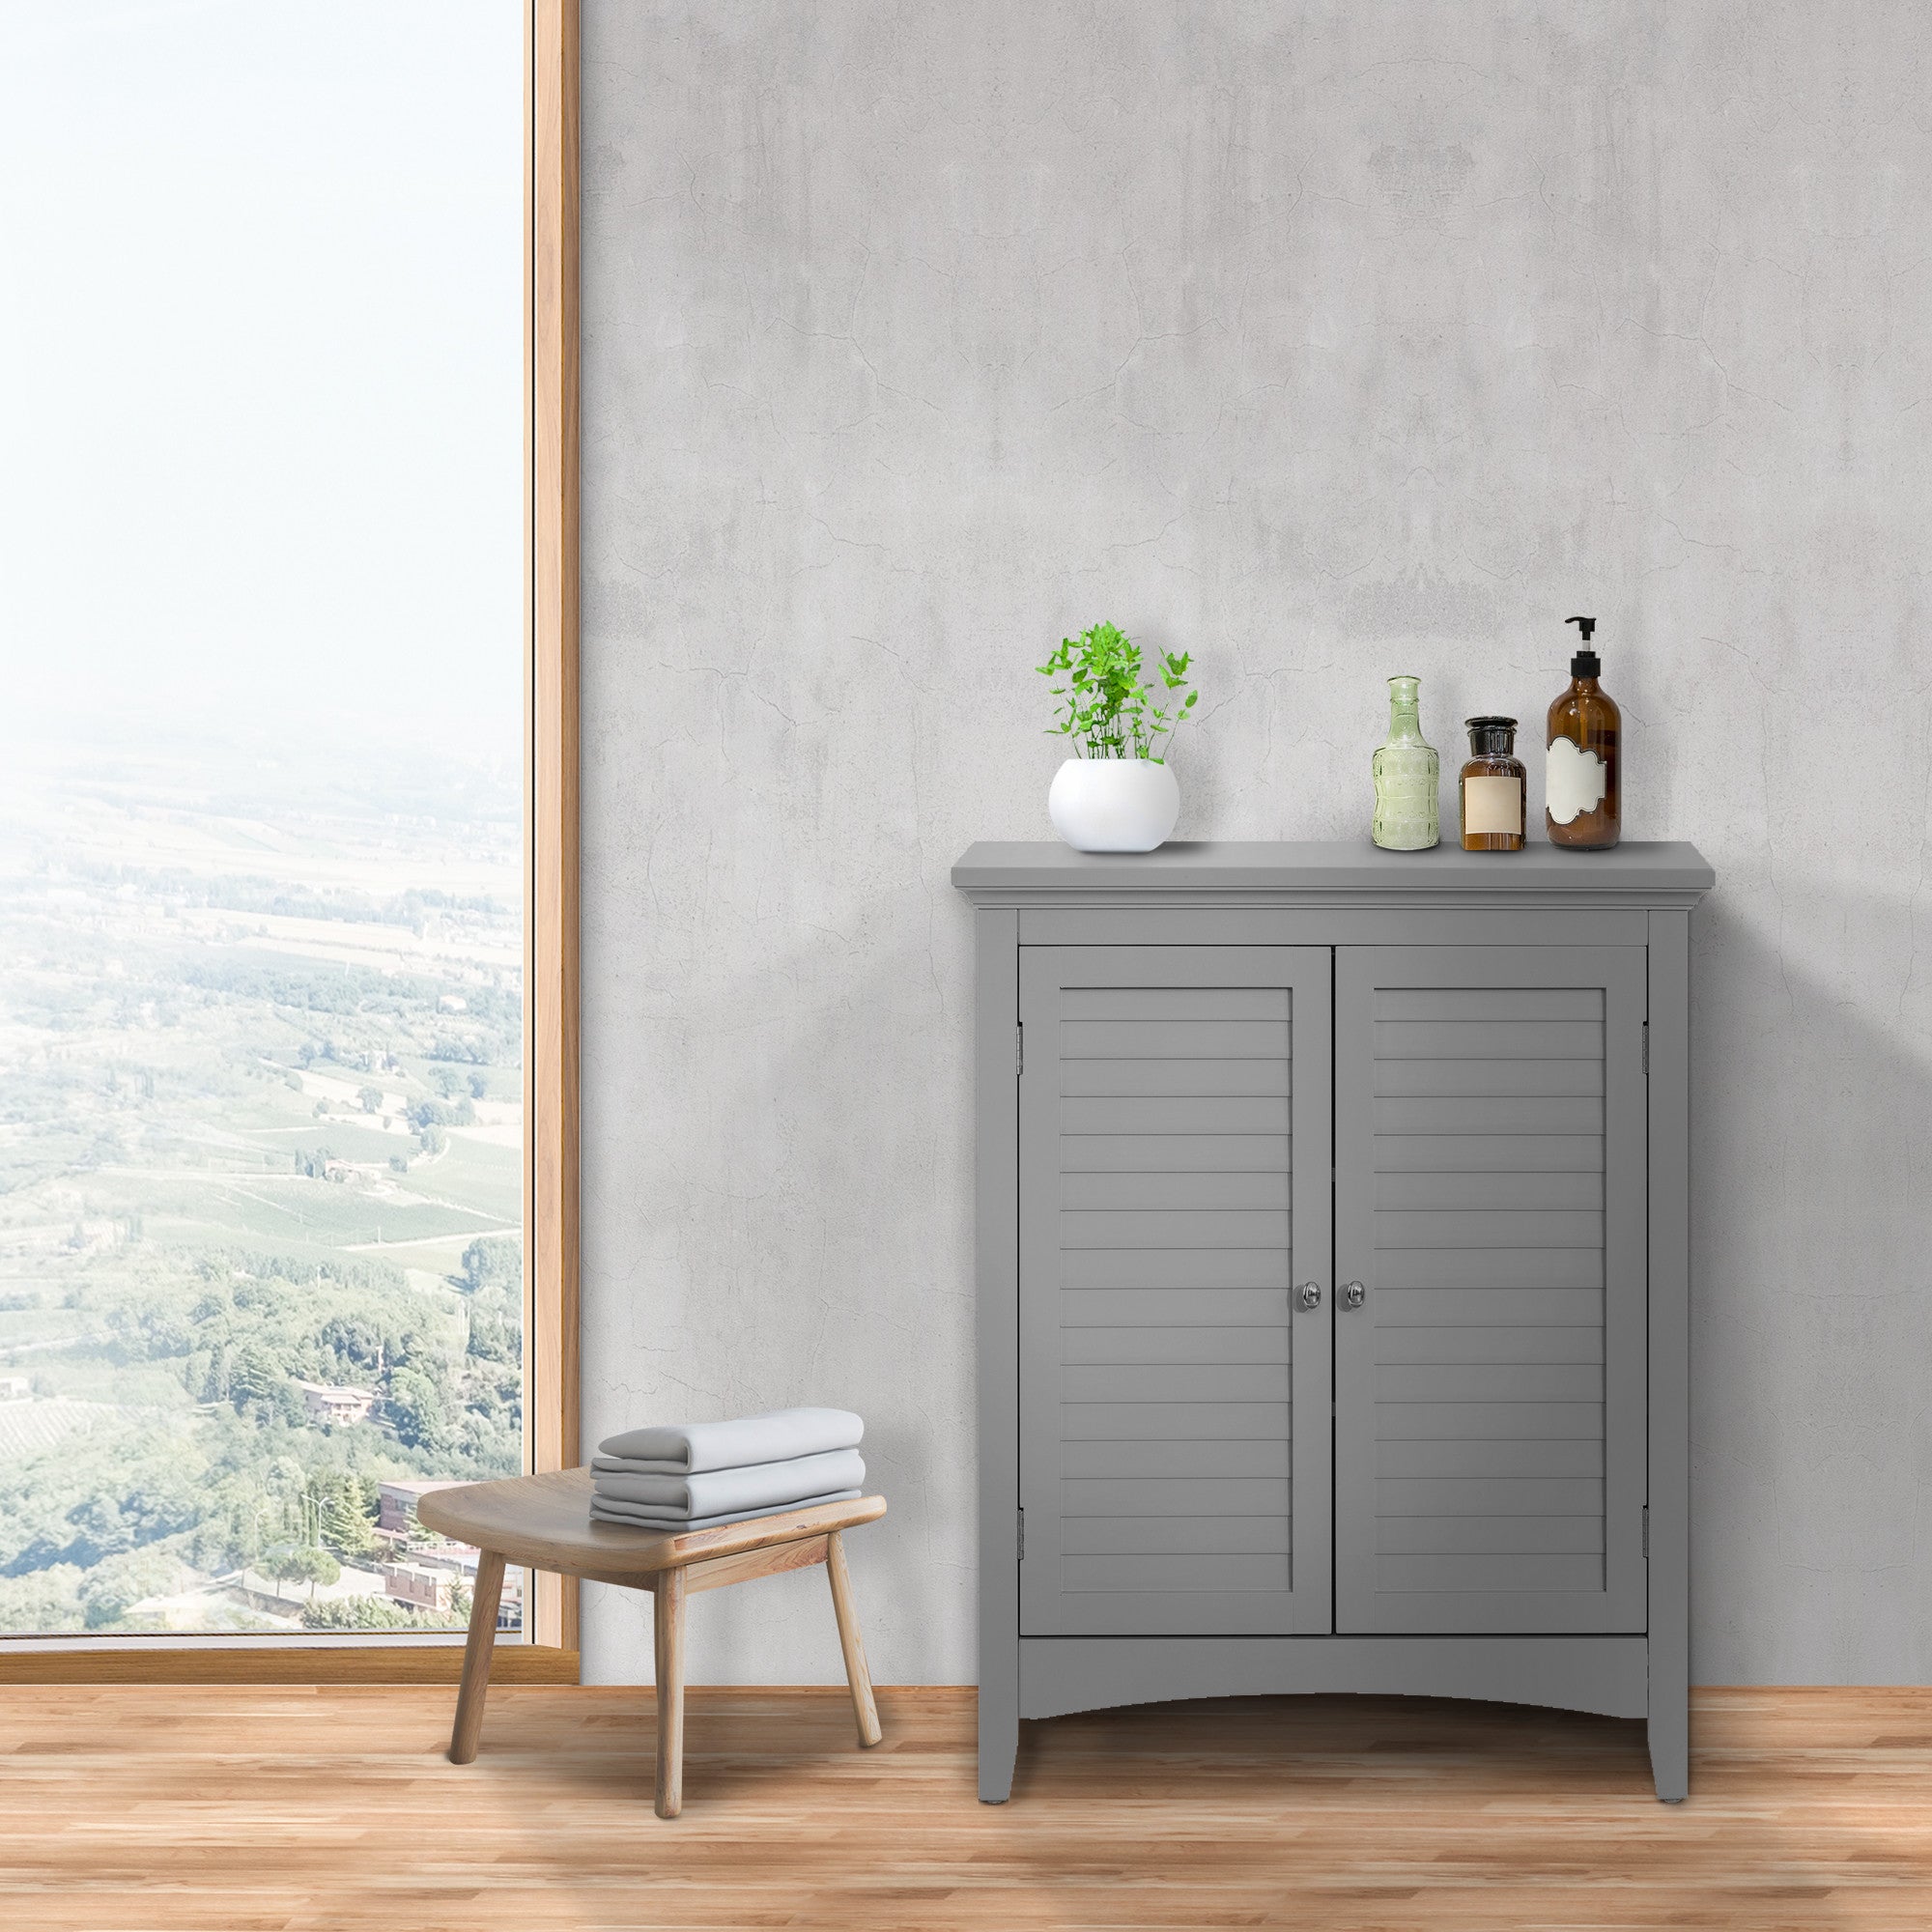 Teamson Home Glancy Wooden Floor Cabinet with Shutter Doors and Adjustable Shelves, Gray